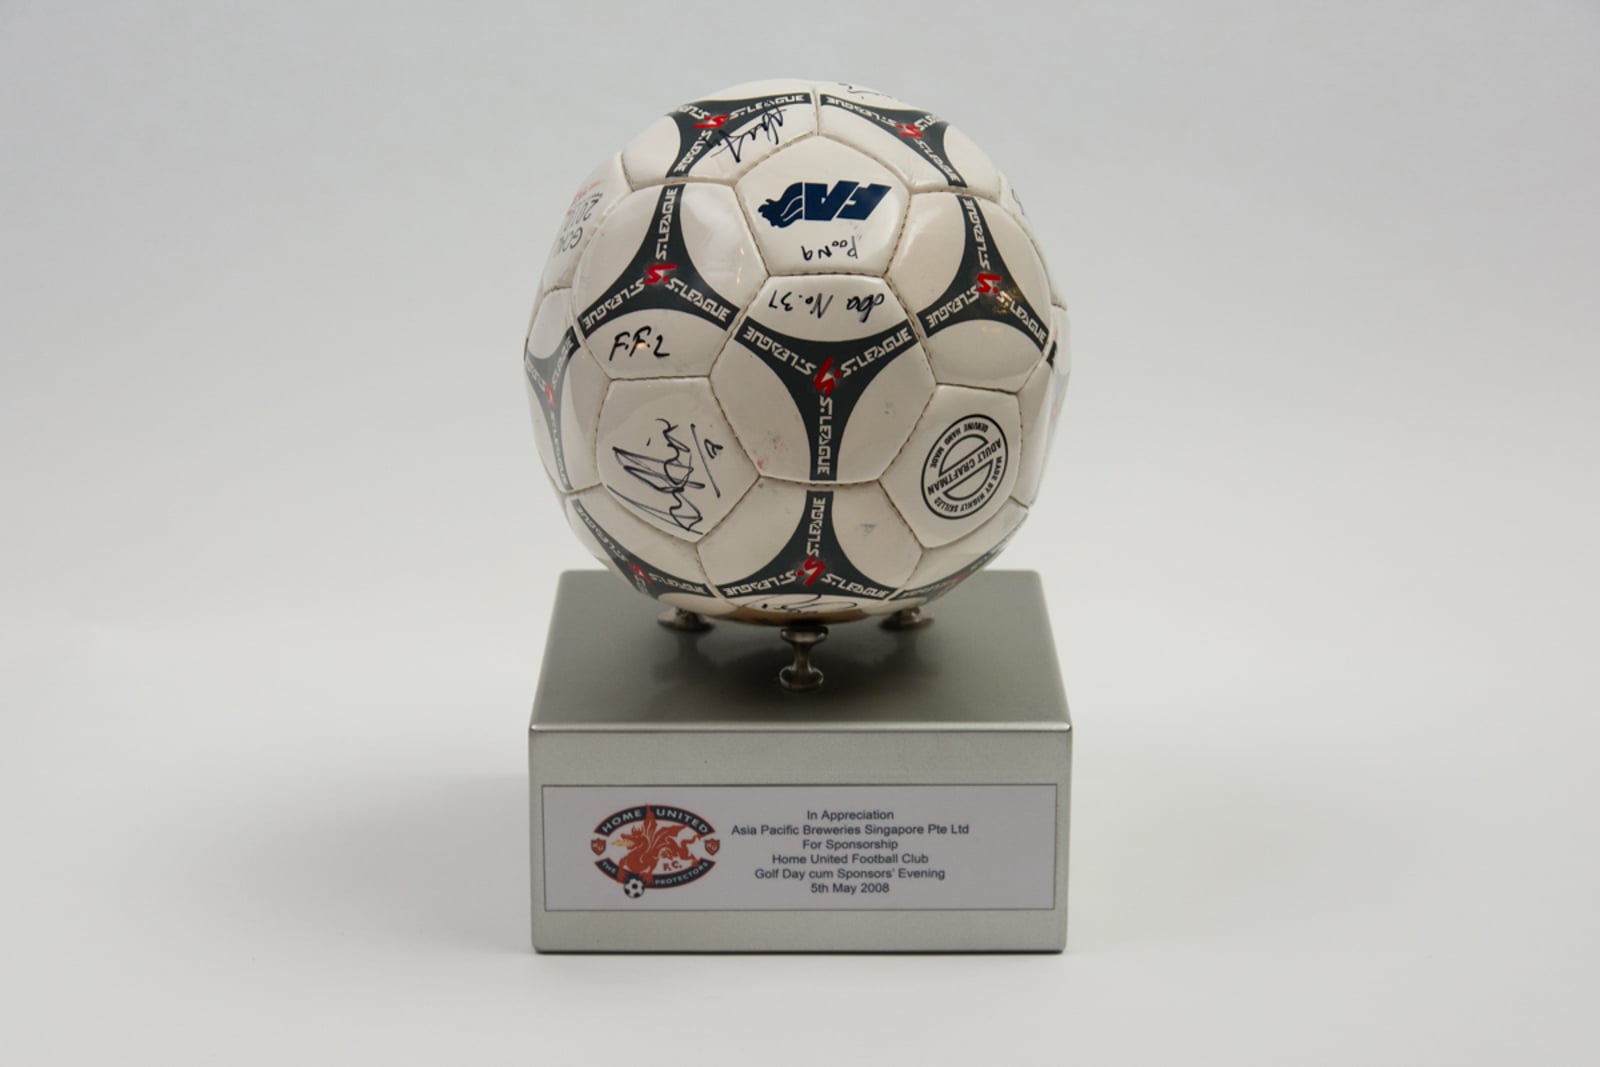 Home United Football Club Trophy 2008